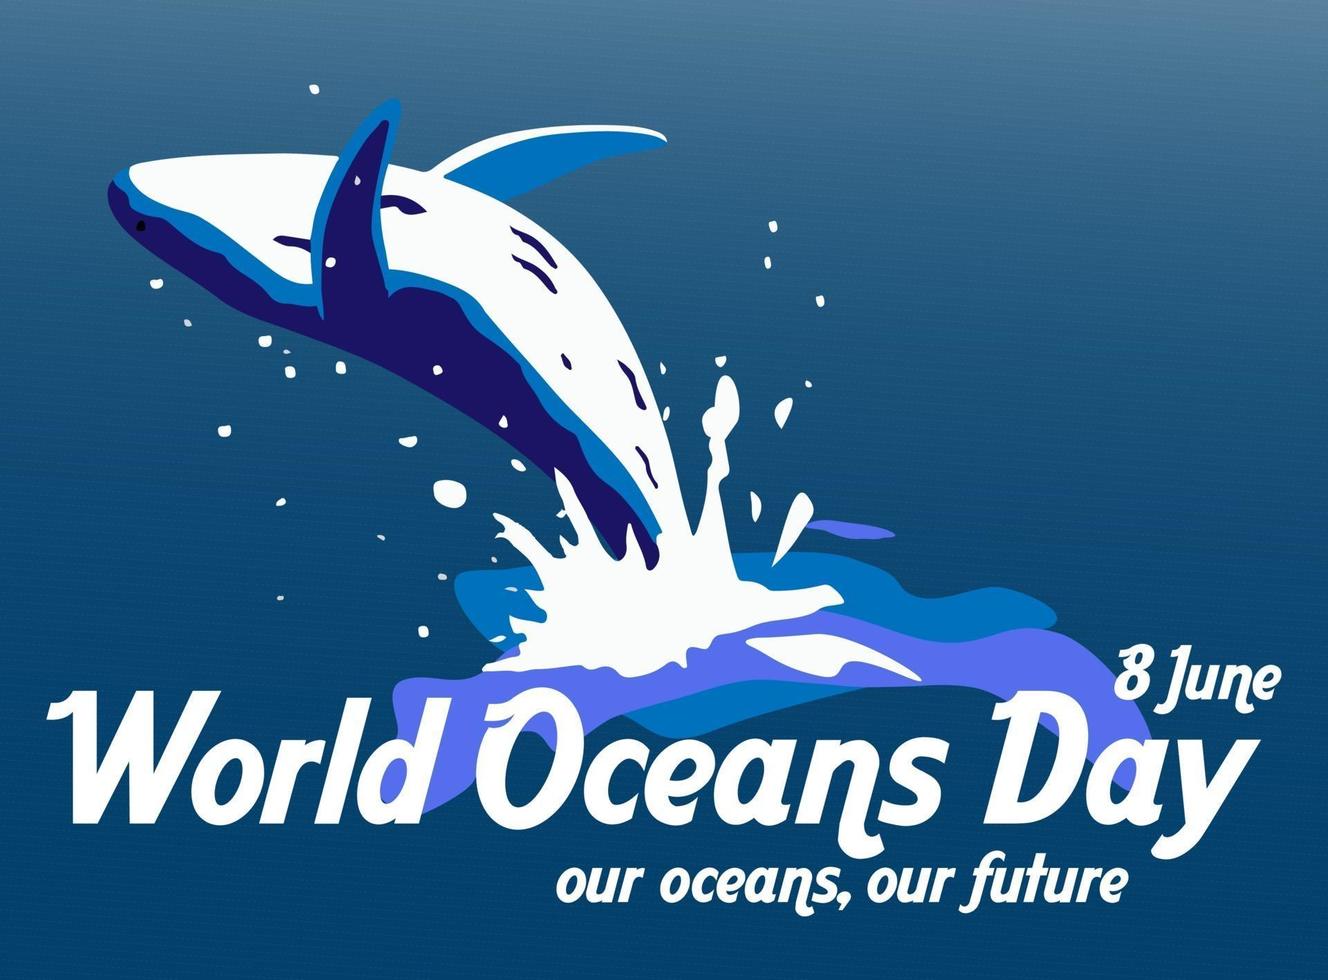 vetor do dia mundial do oceano